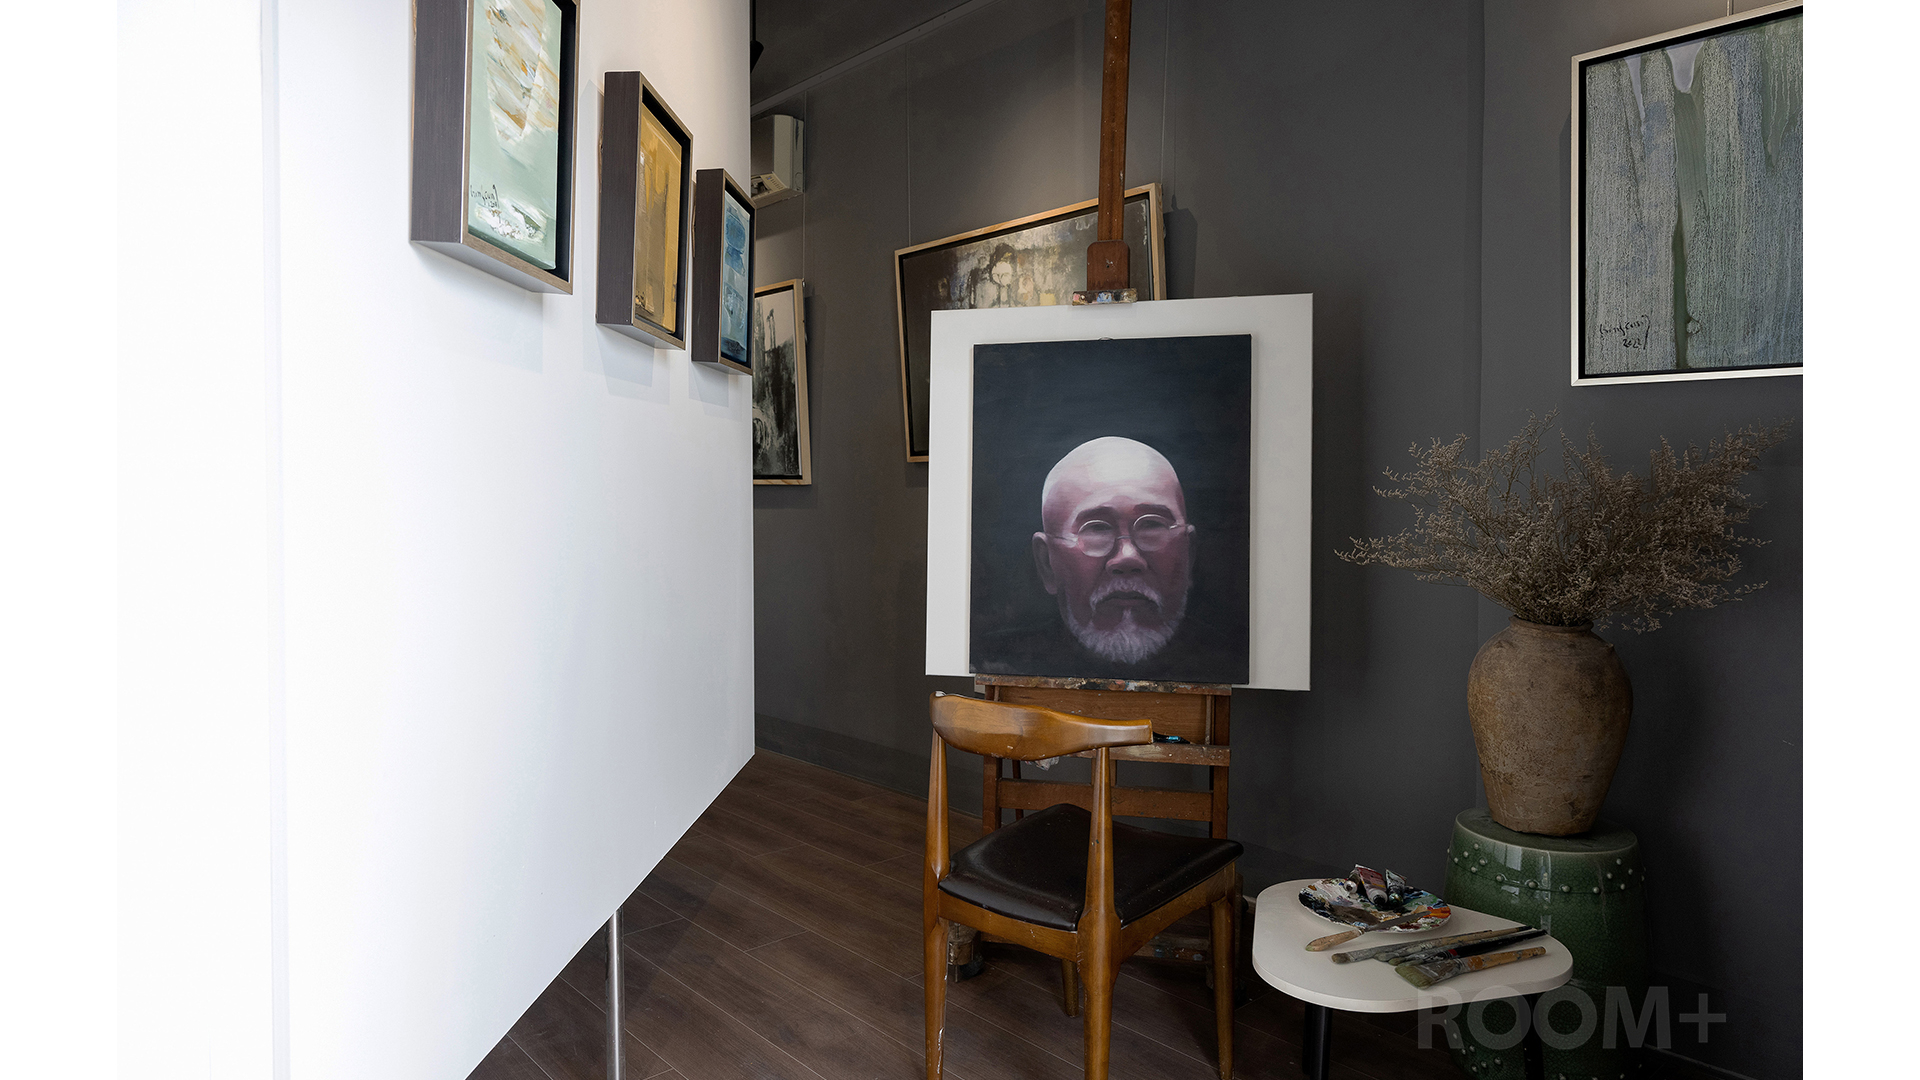 ROOM+ Trịnh Cung Gallery - Studio (9)